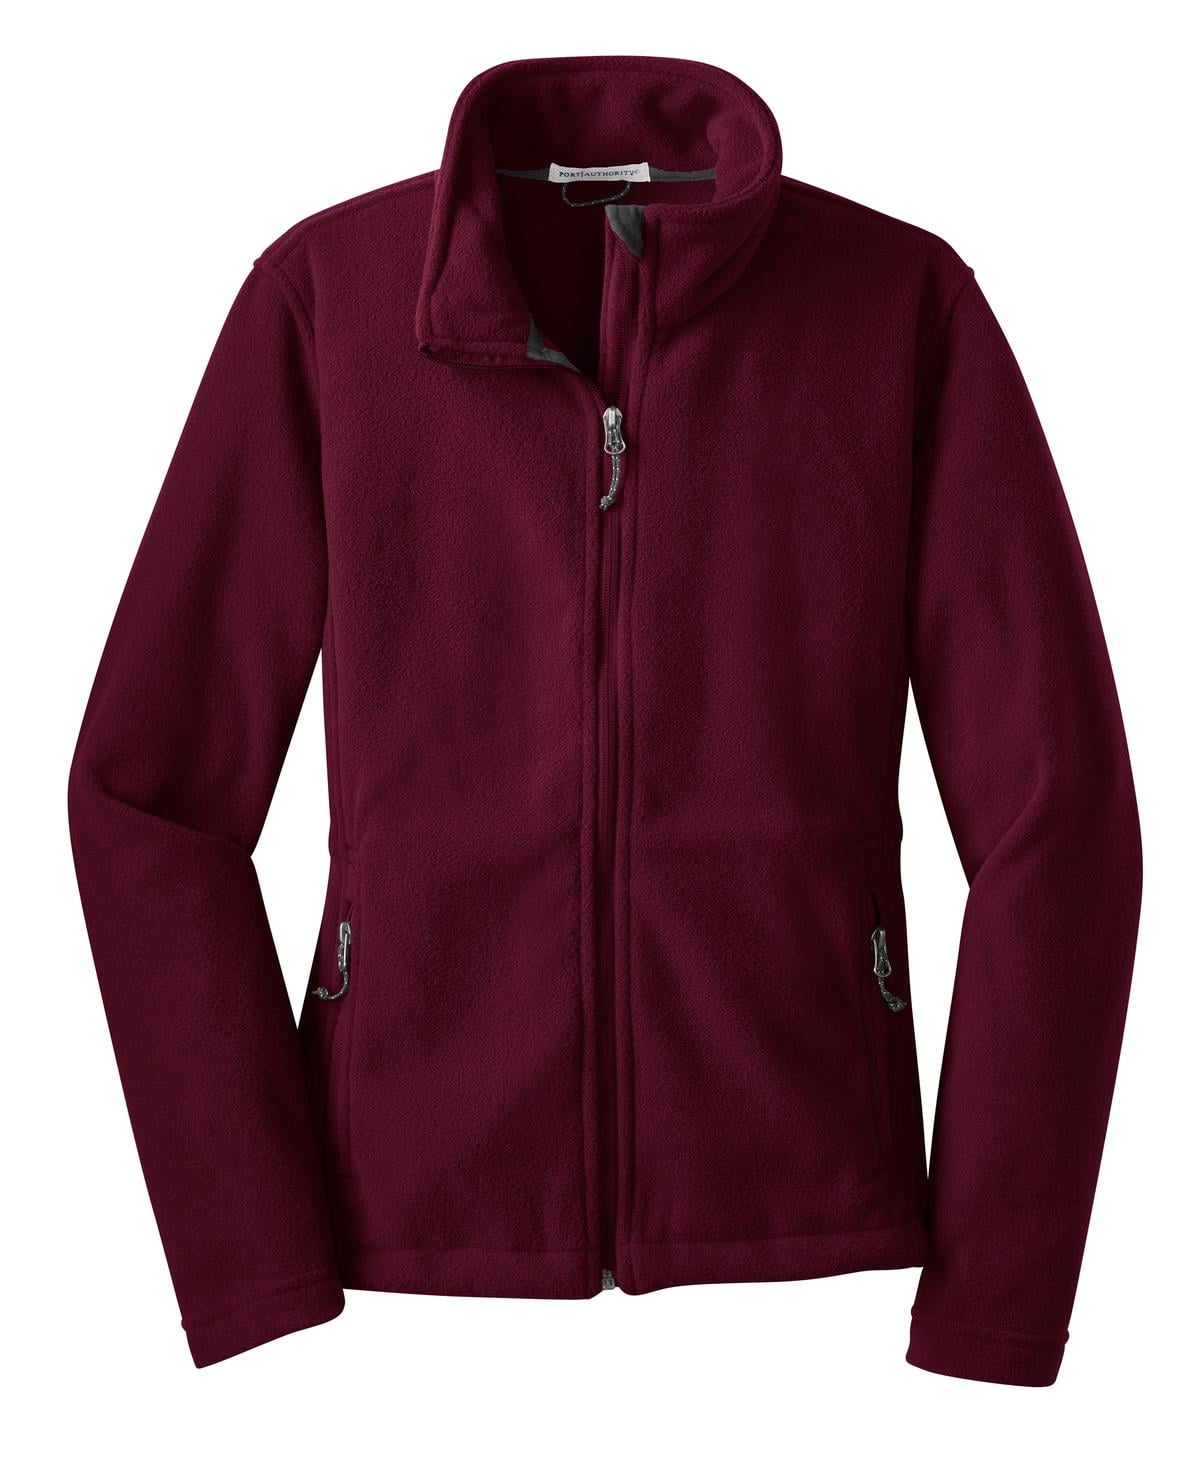 Port Authority Ladies Value Fleece Jacket-L (Maroon) 